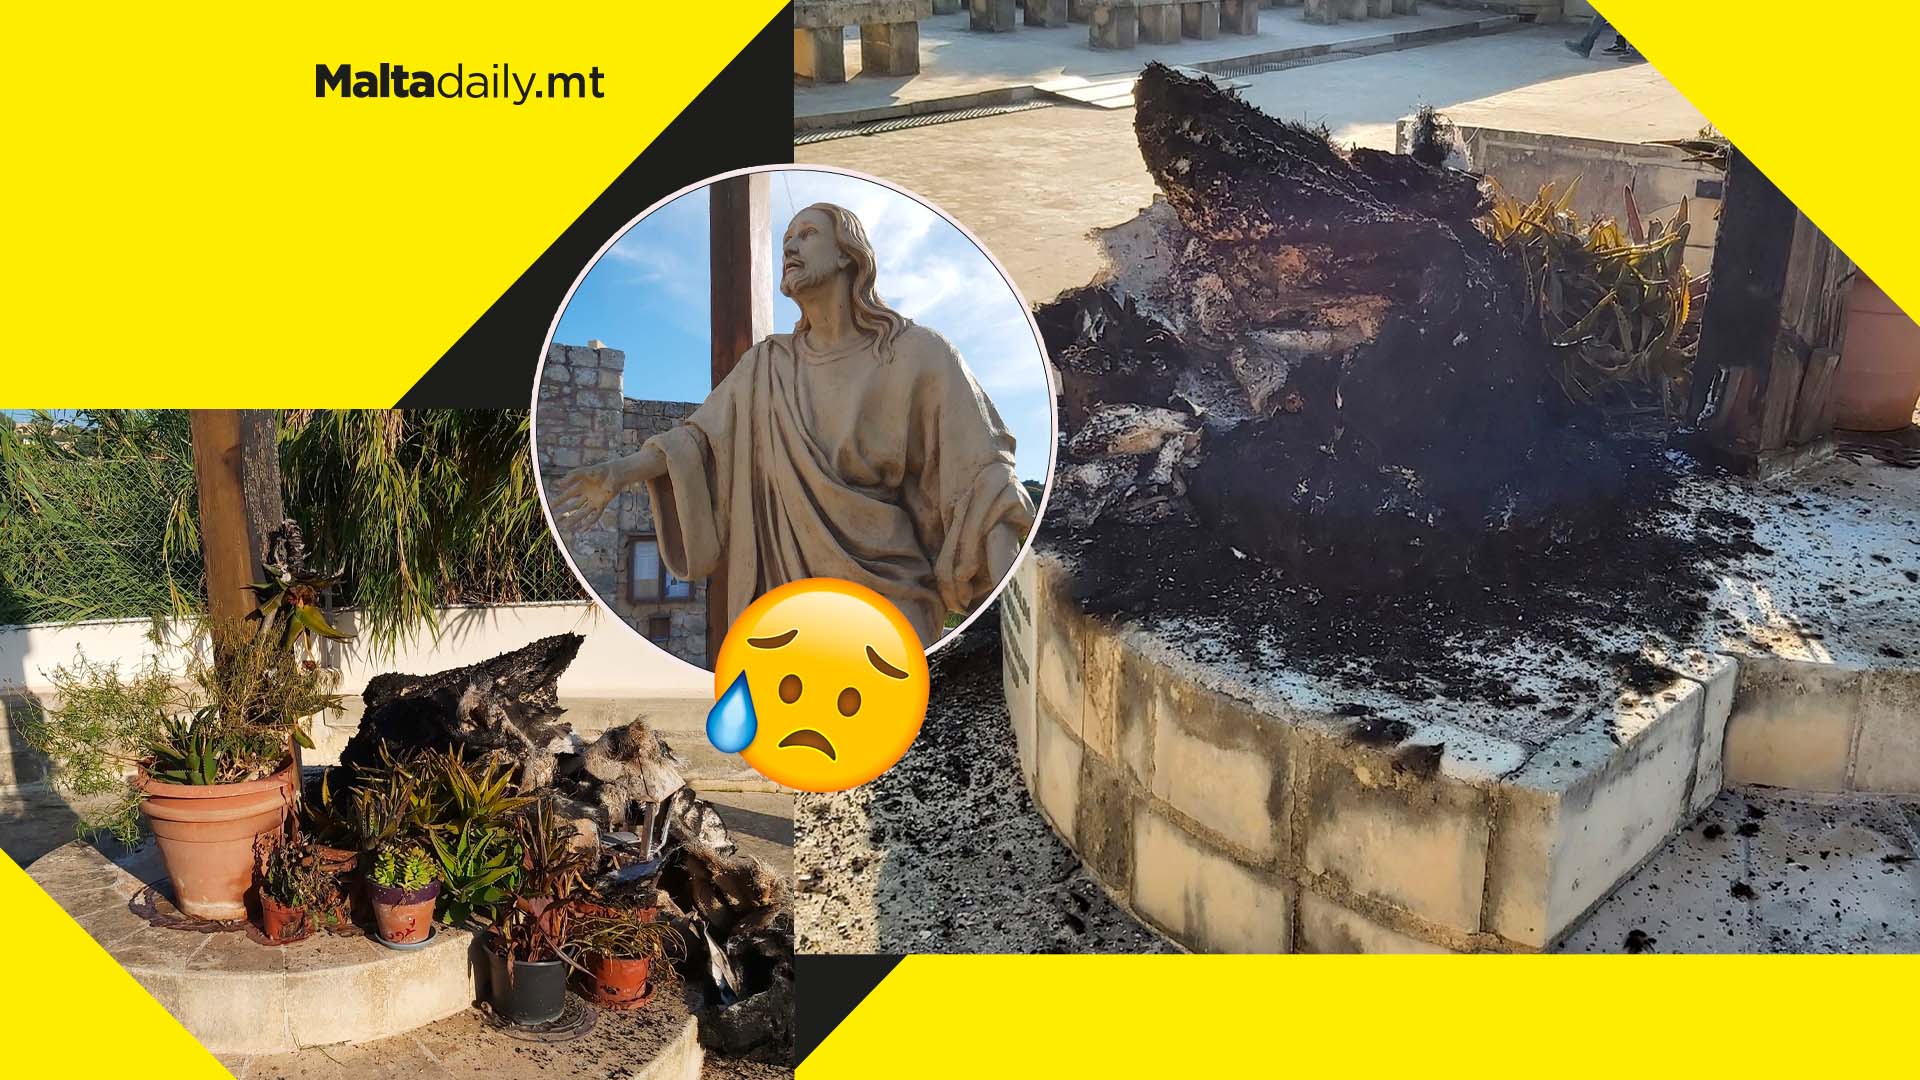 Jesus statue in Girgenti burned down - vandalism not excluded